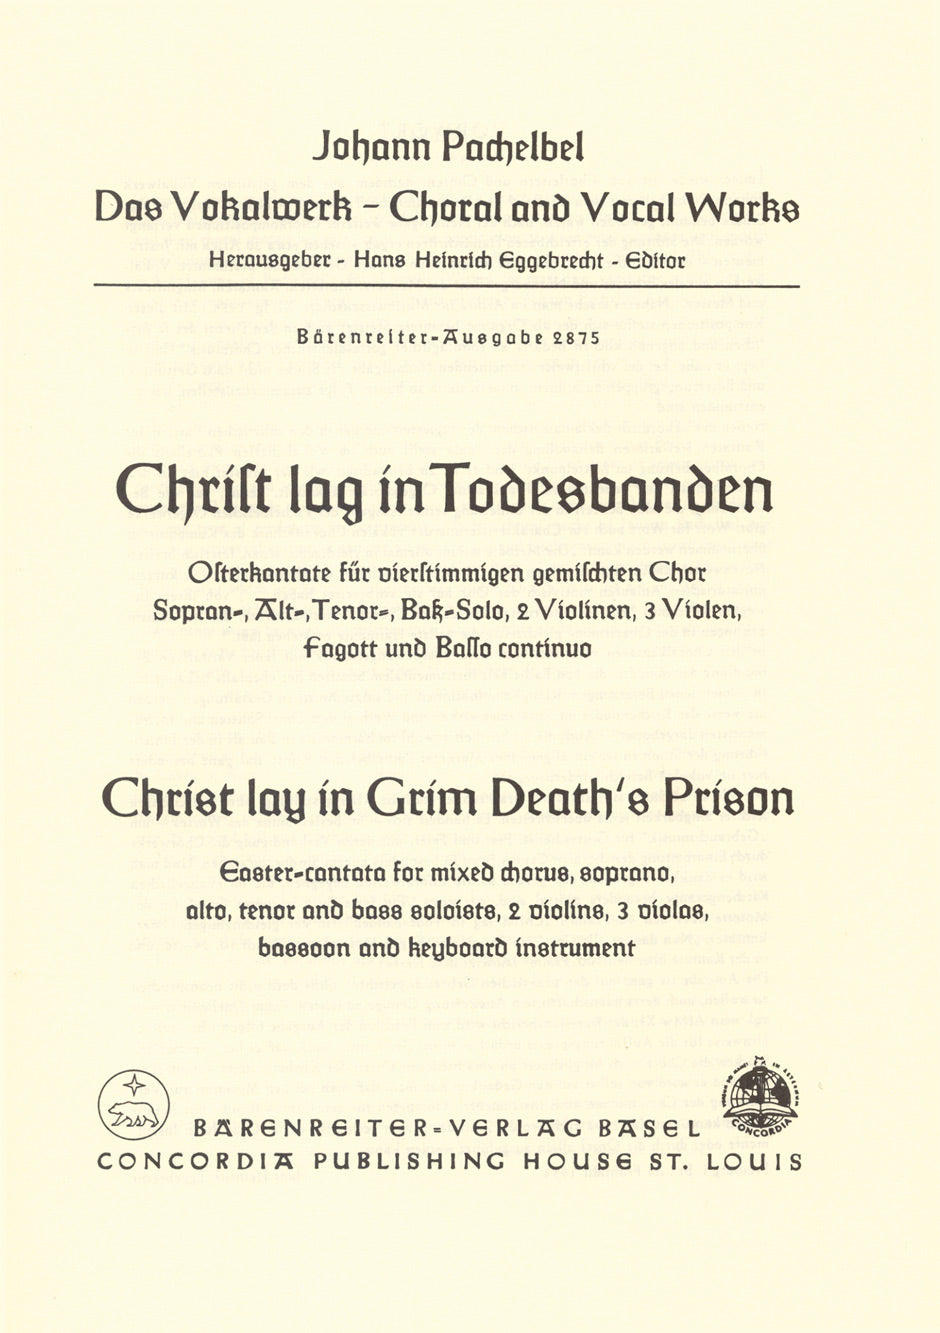 Pachelbel: Christ lay in grim death's prison